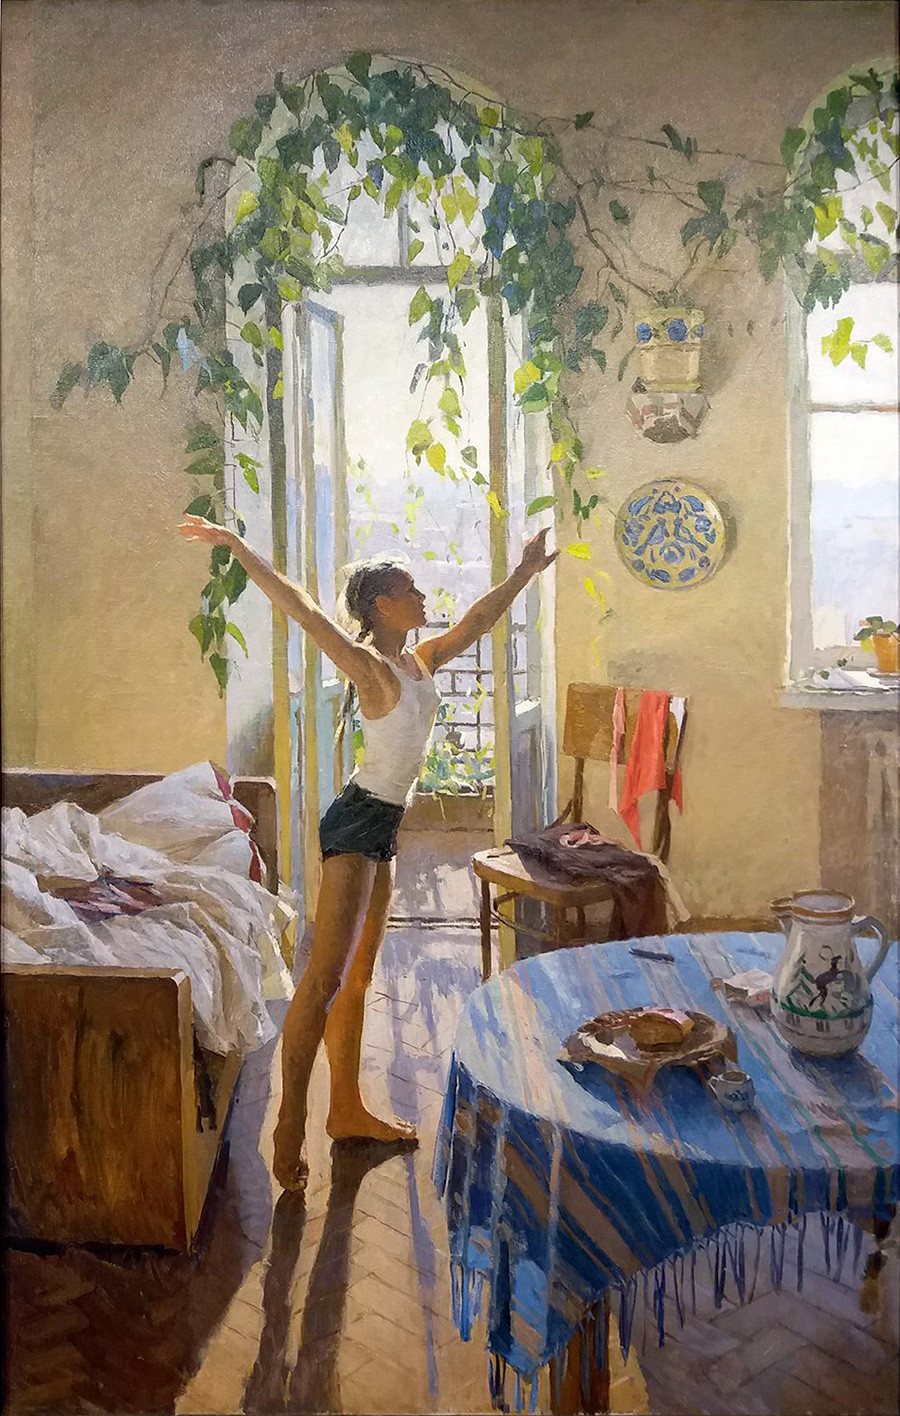 Le matin par Tatiana Iablonskaïa, 1954
